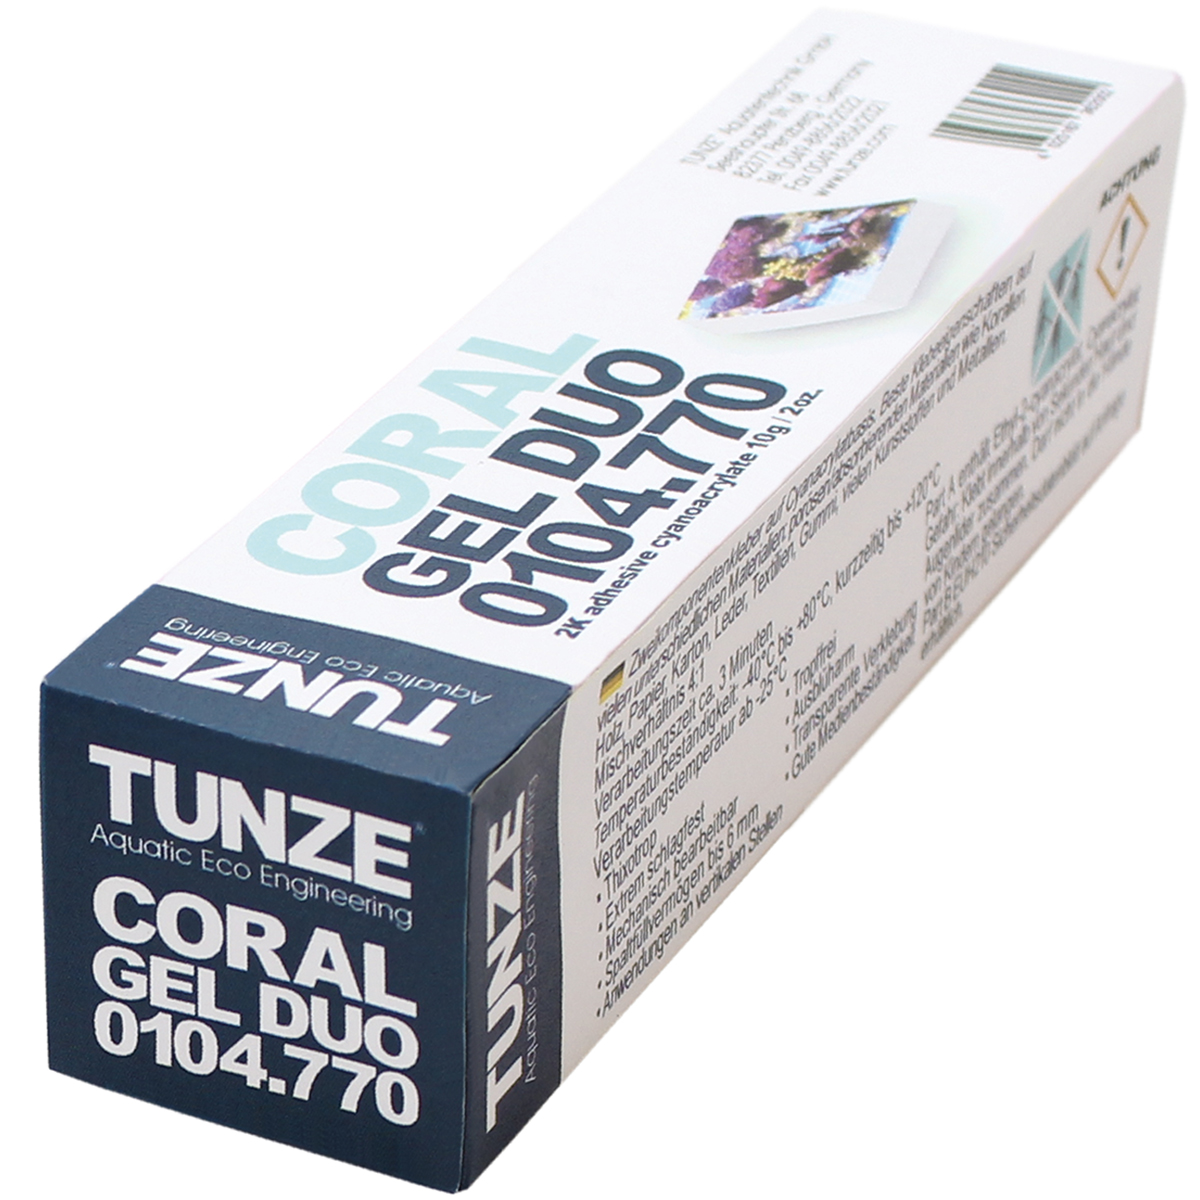 Coral Gel Duo,10 g